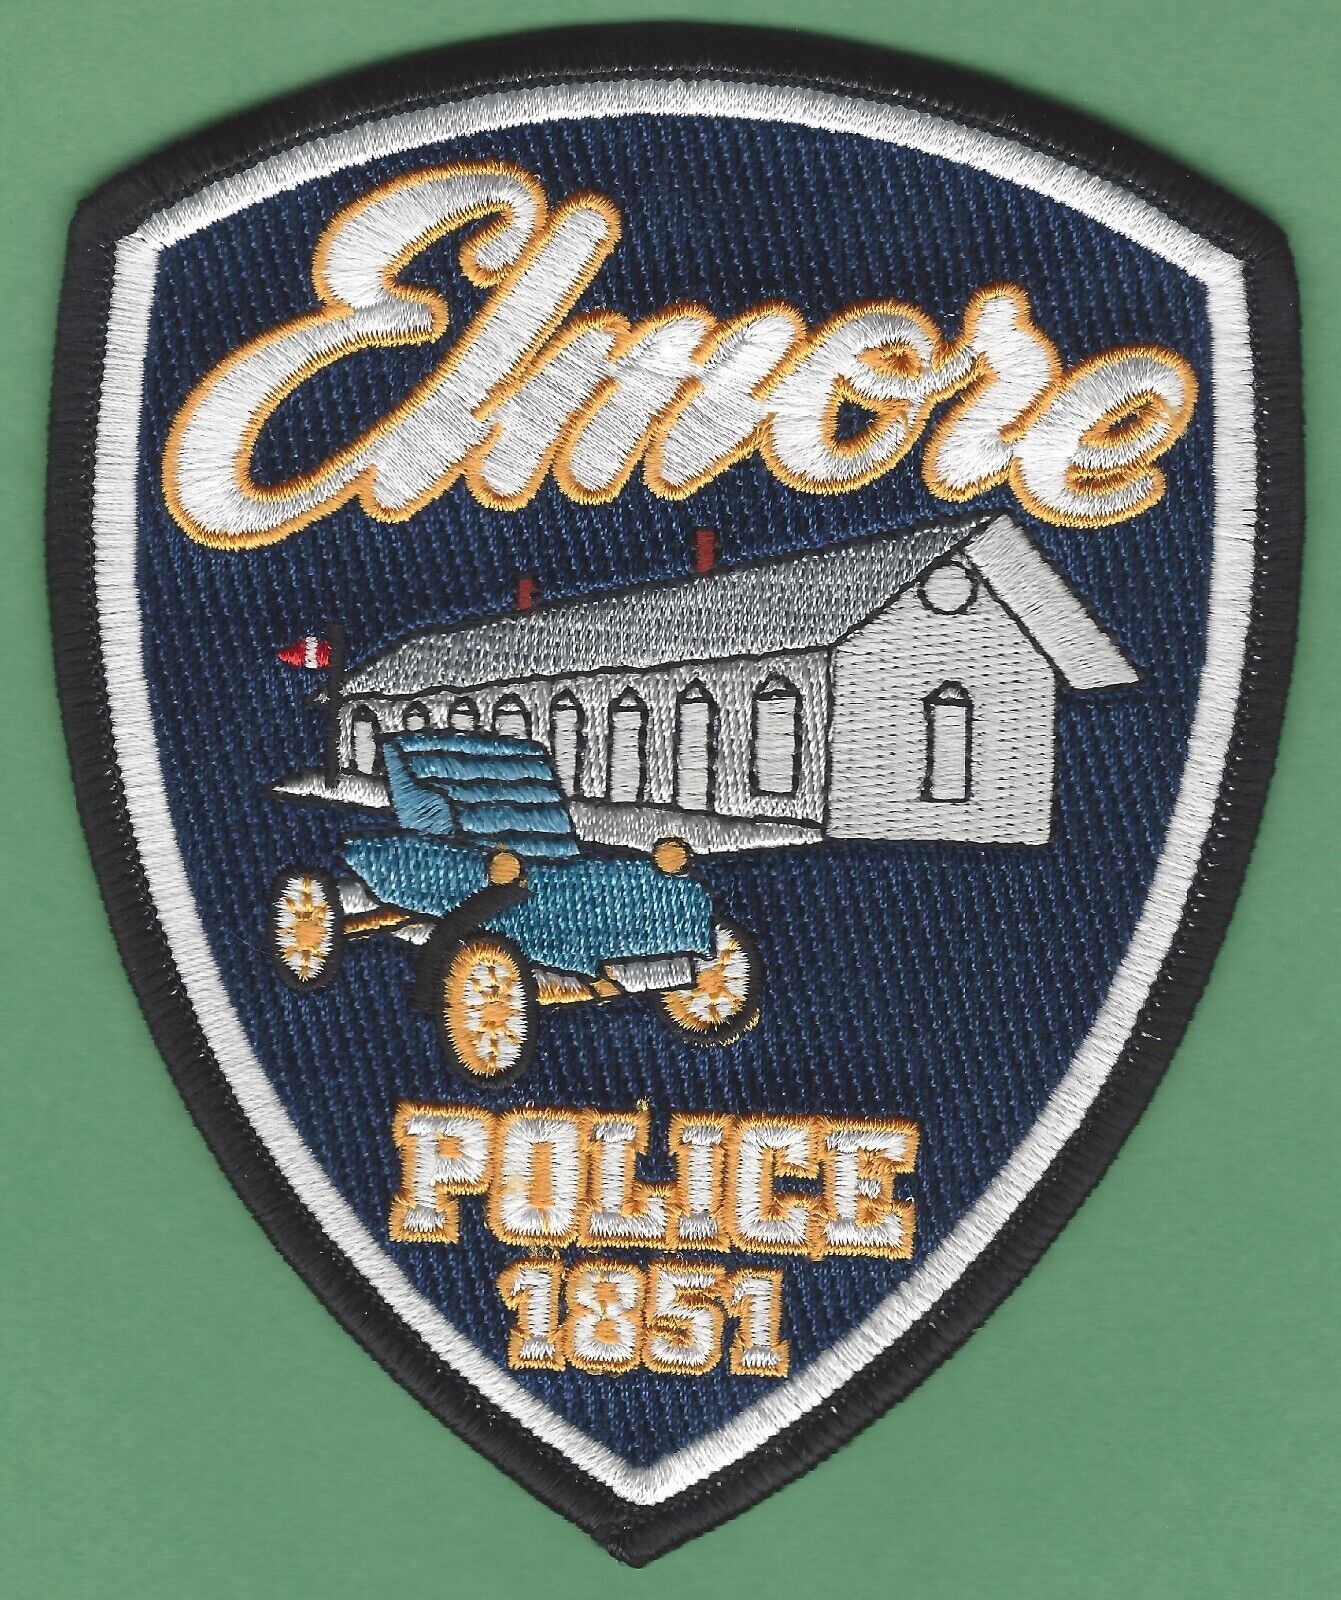 ELMORE OHIO POLICE SHOULDER PATCH